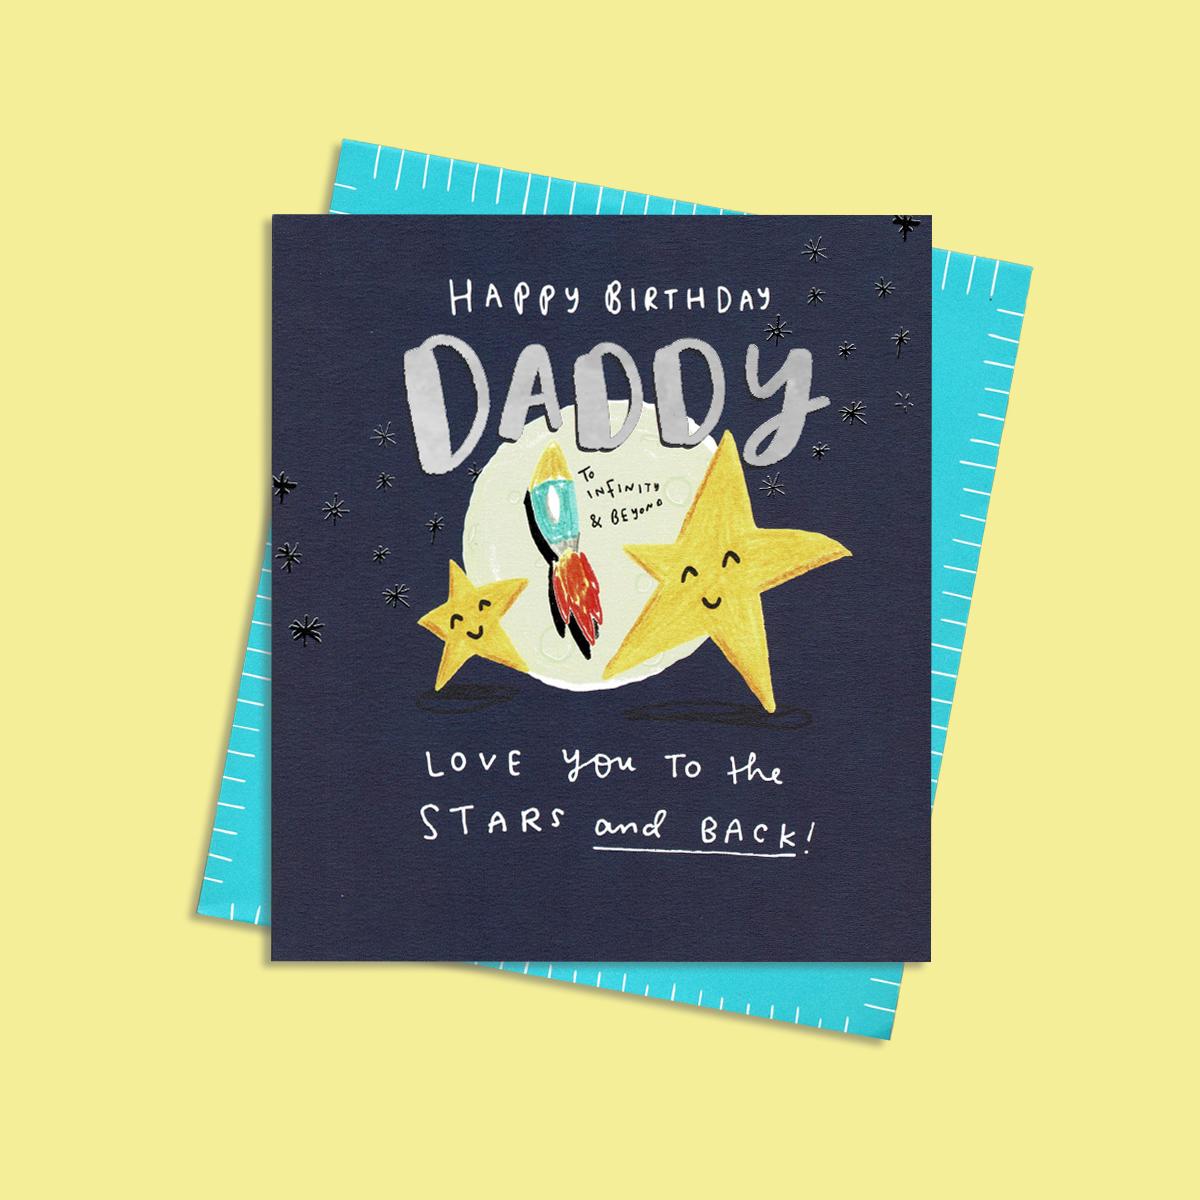 Daddy Birthday Card Alongside Its Teal Envelope